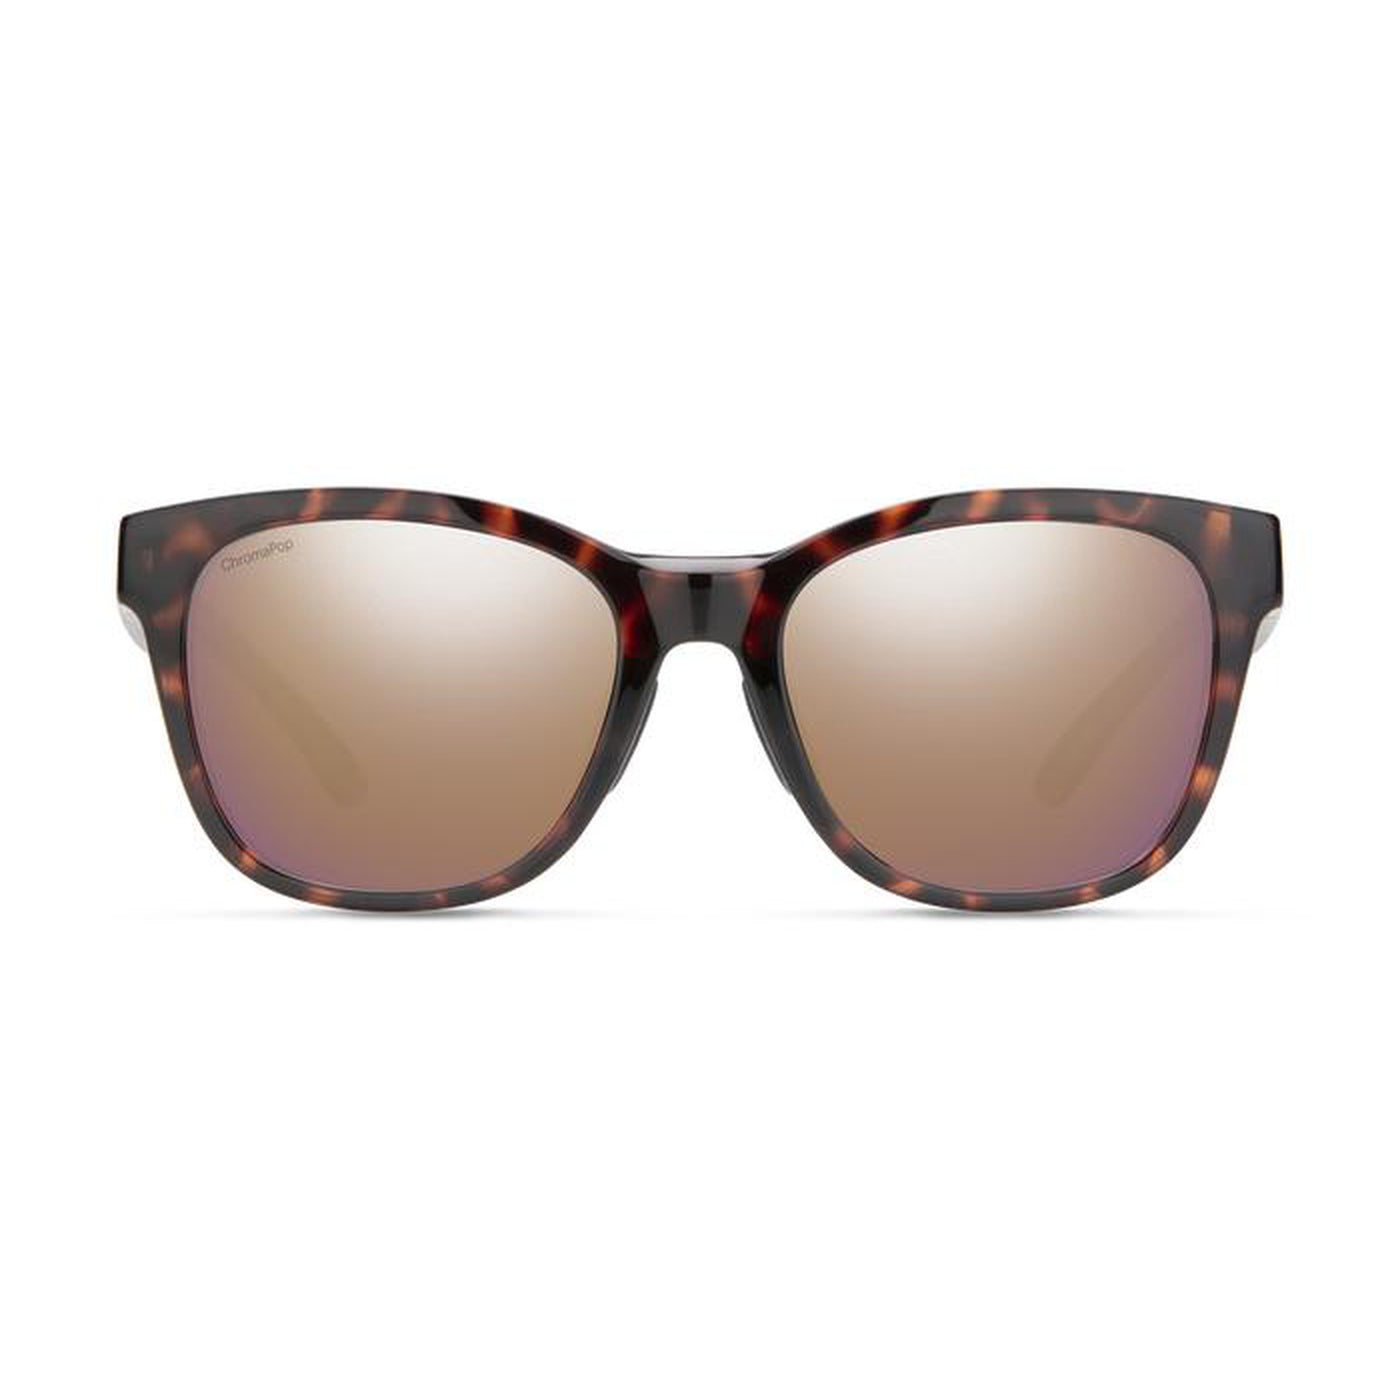 Smith Caper-Sunglasses-Topline Eyewear